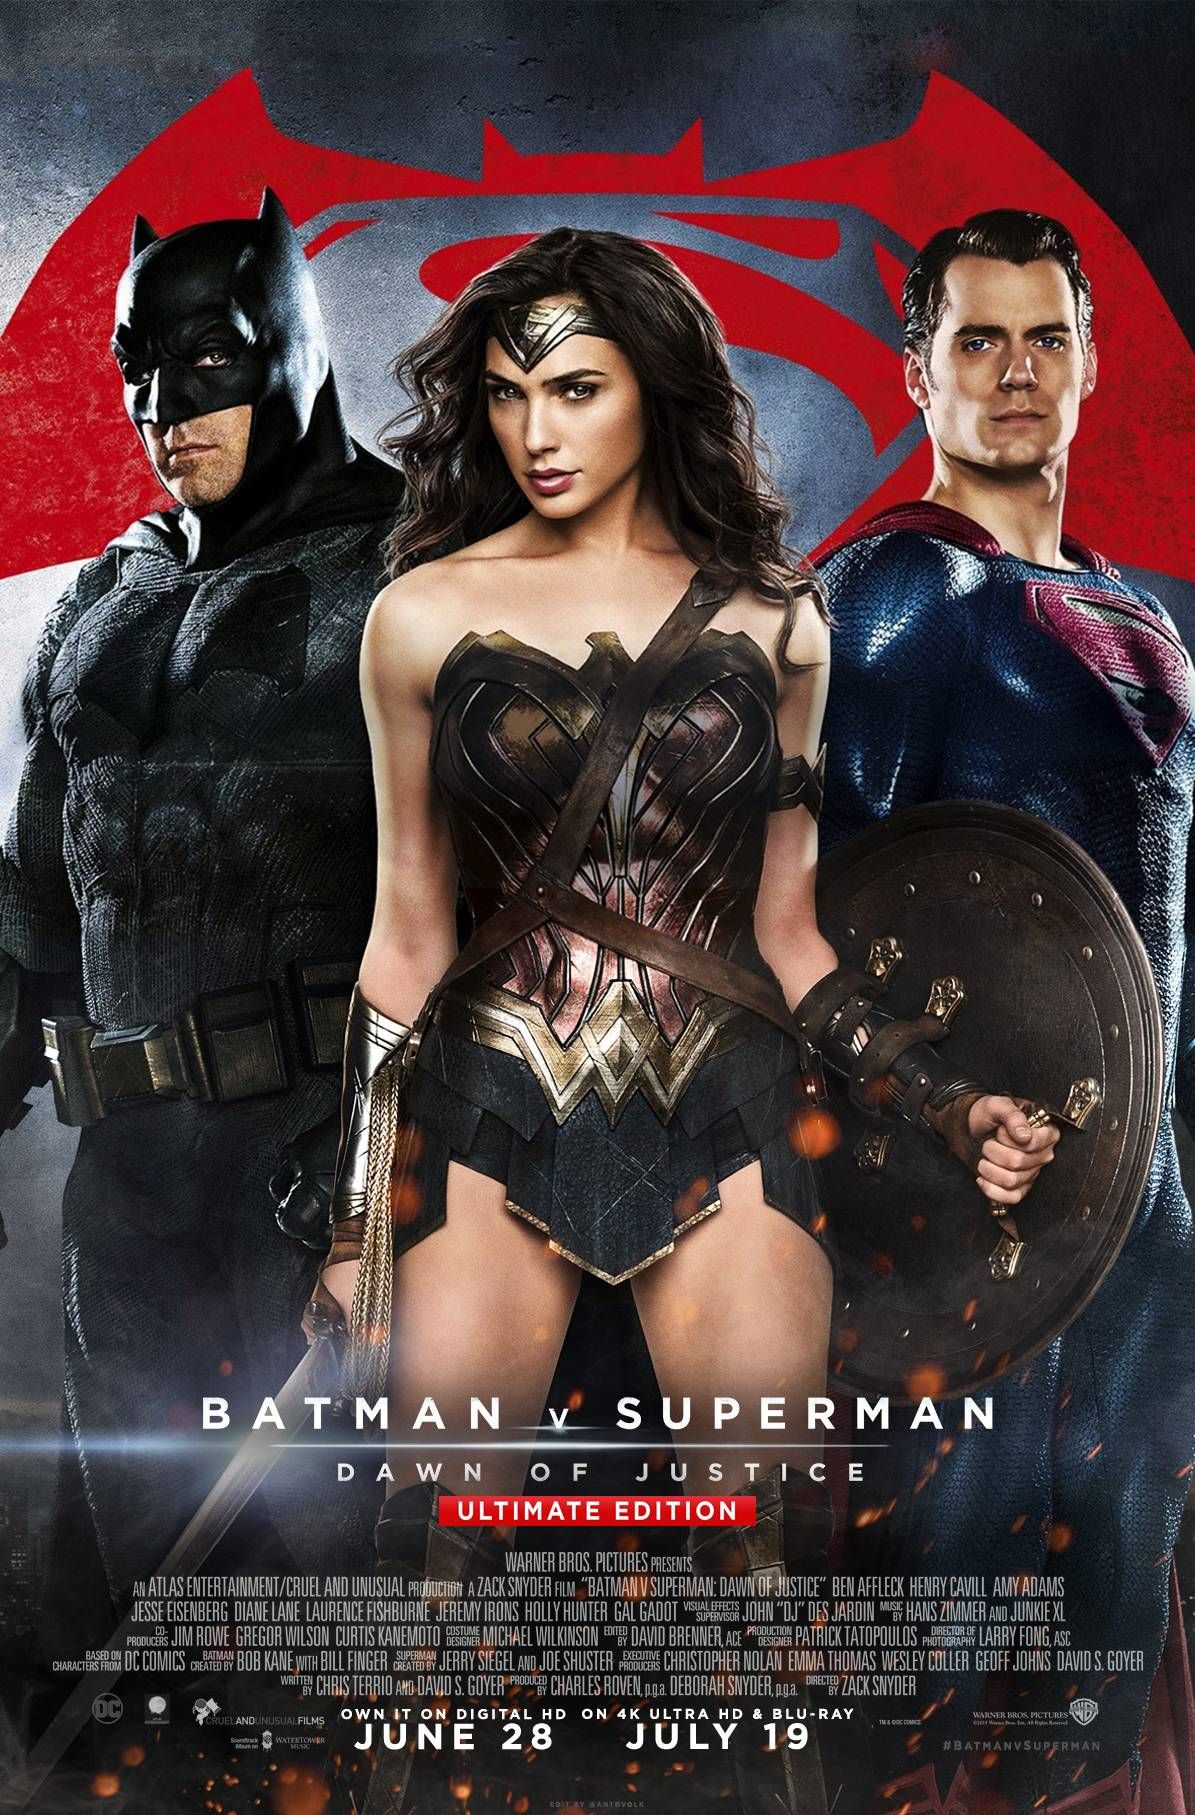 Batman v Superman: Dawn of Justice (2016) Hindi Dubbed BluRay download full movie